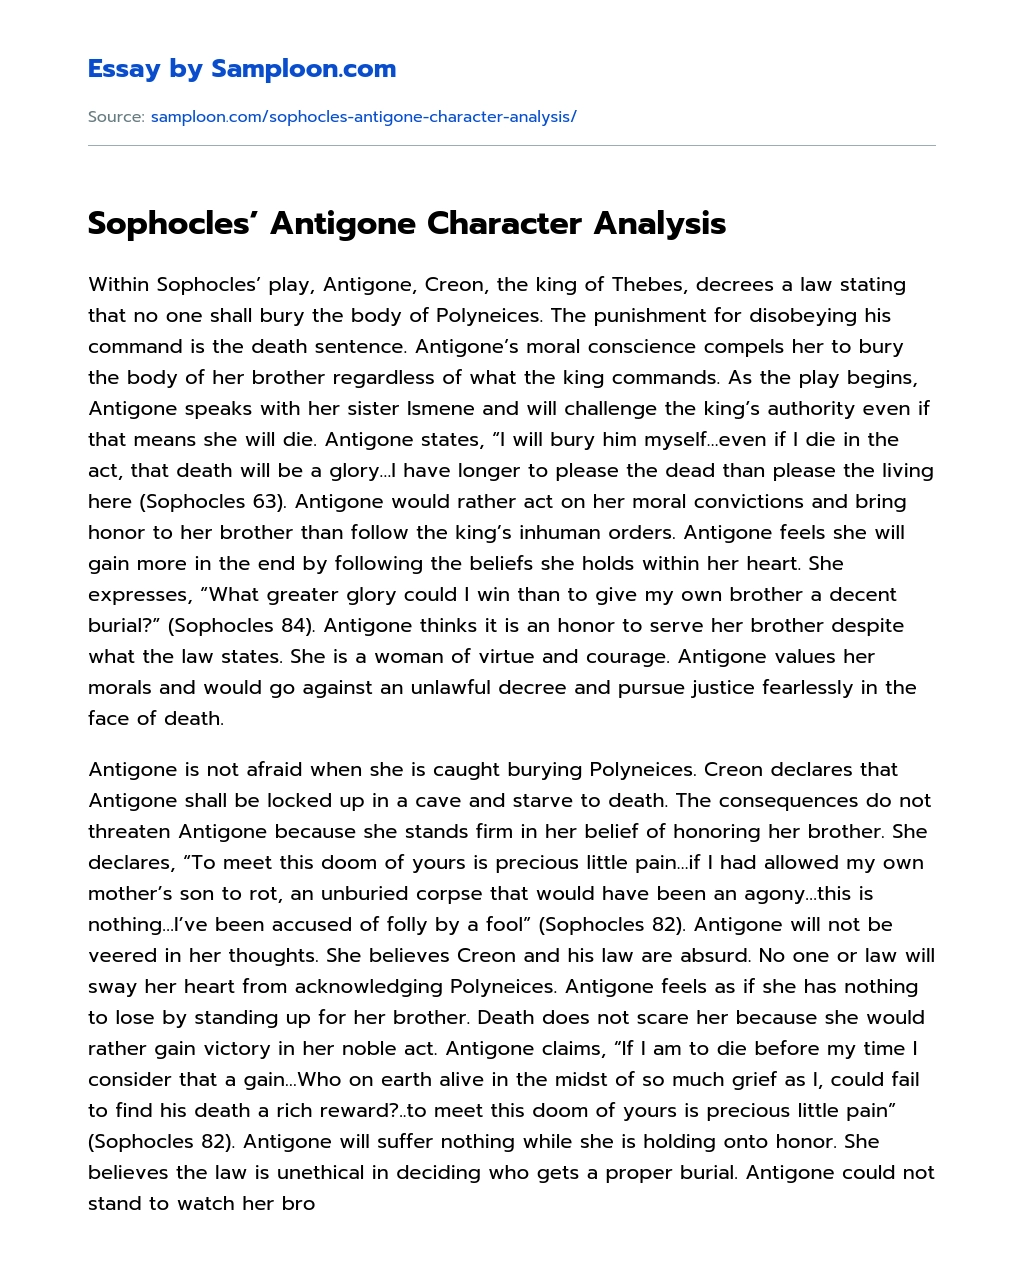 Sophocles’ Antigone Character Analysis essay